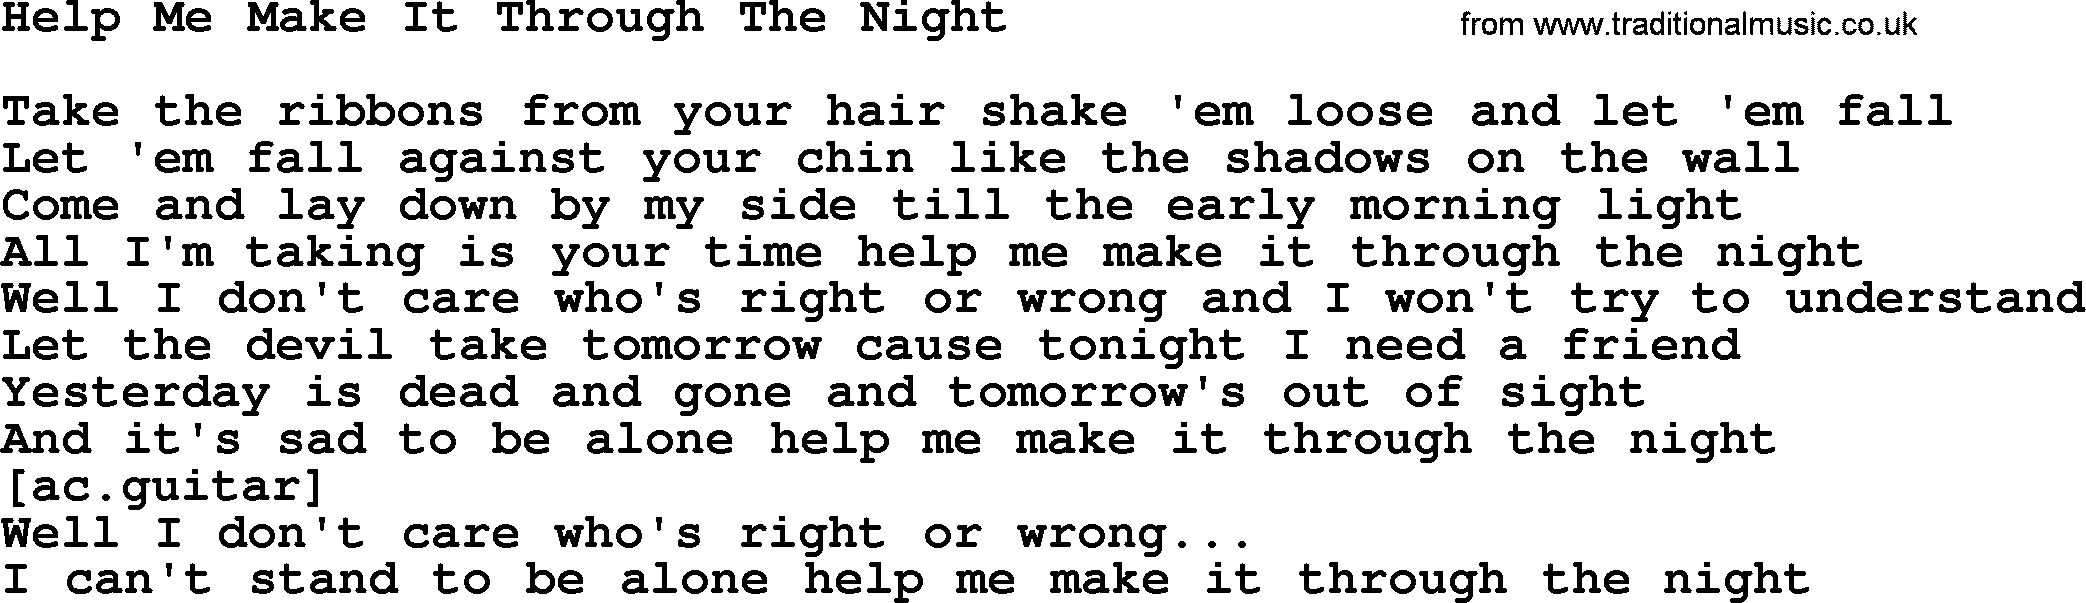 Willie Nelson song: Help Me Make It Through The Night lyrics